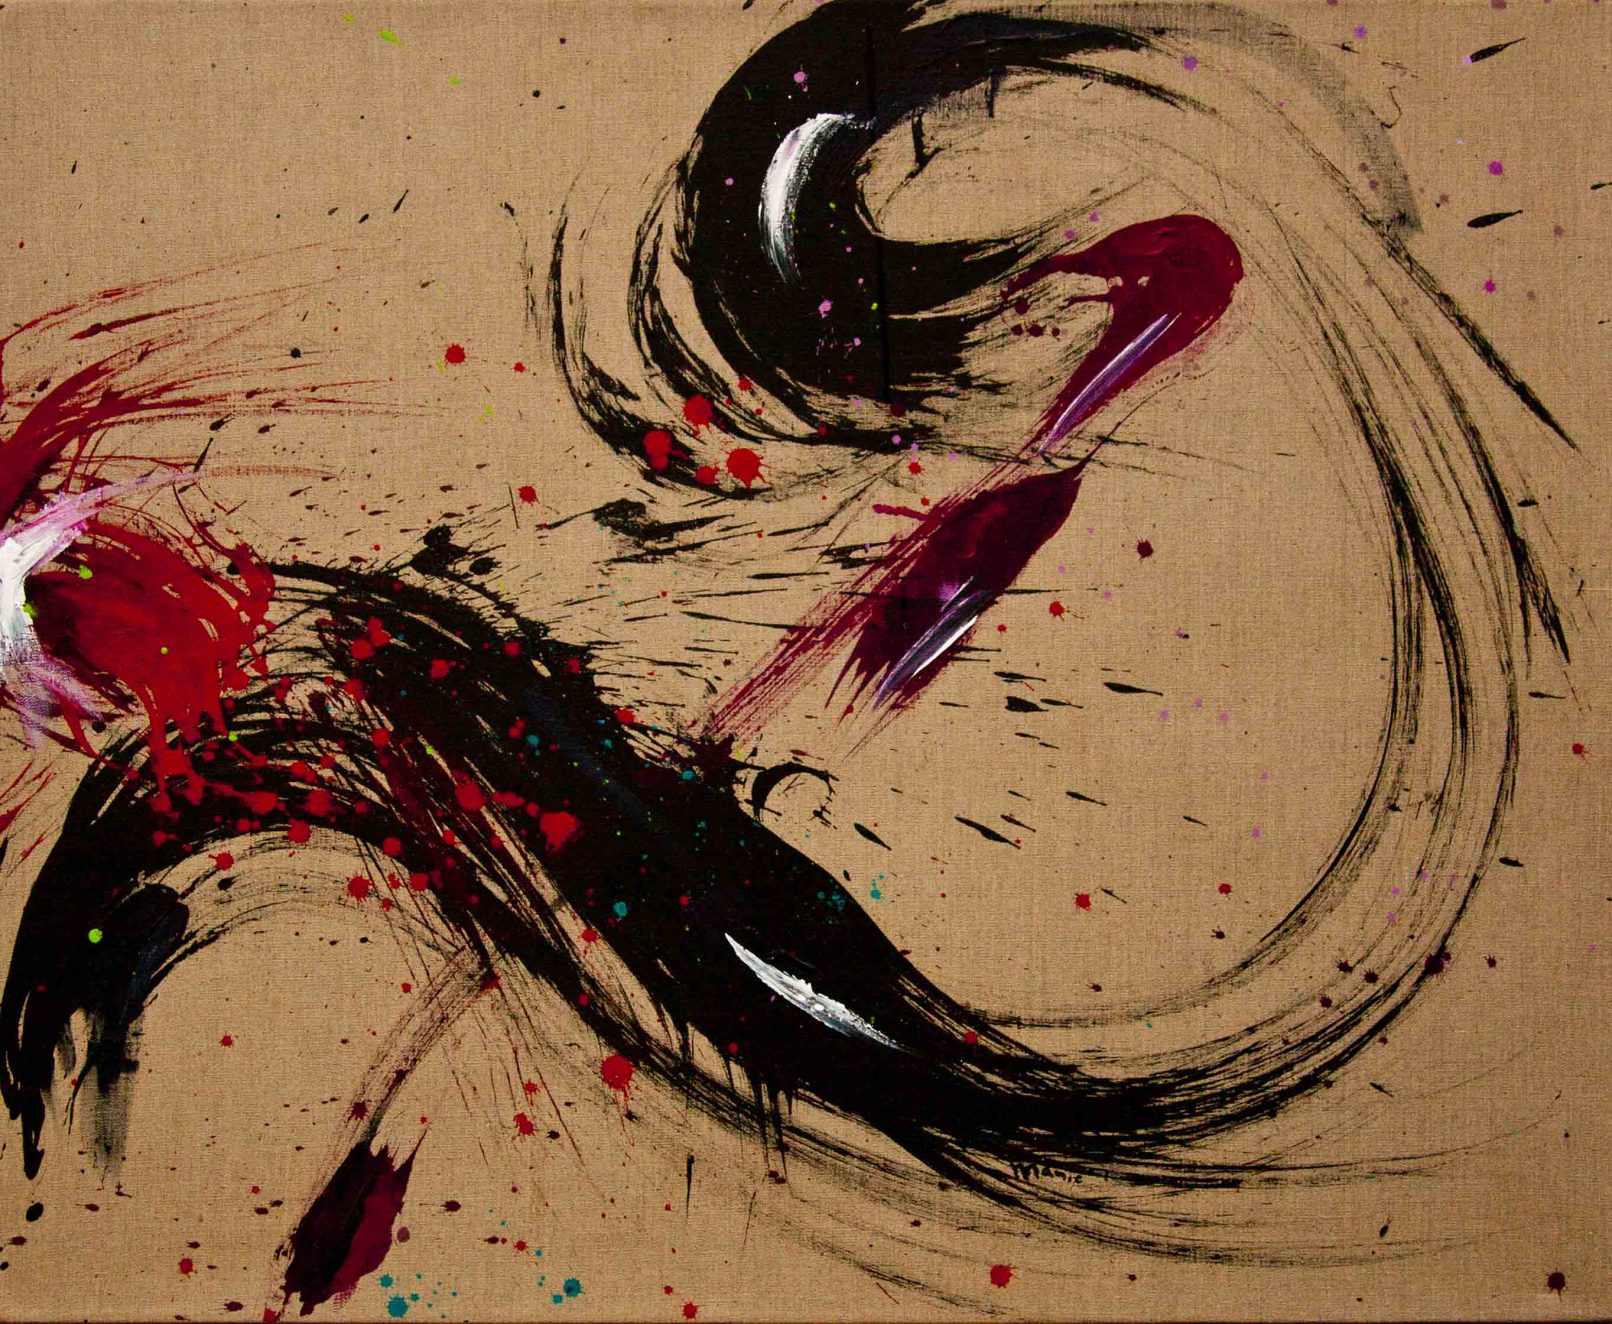 Spit Fire, 120 x 100, acrylic on canvas